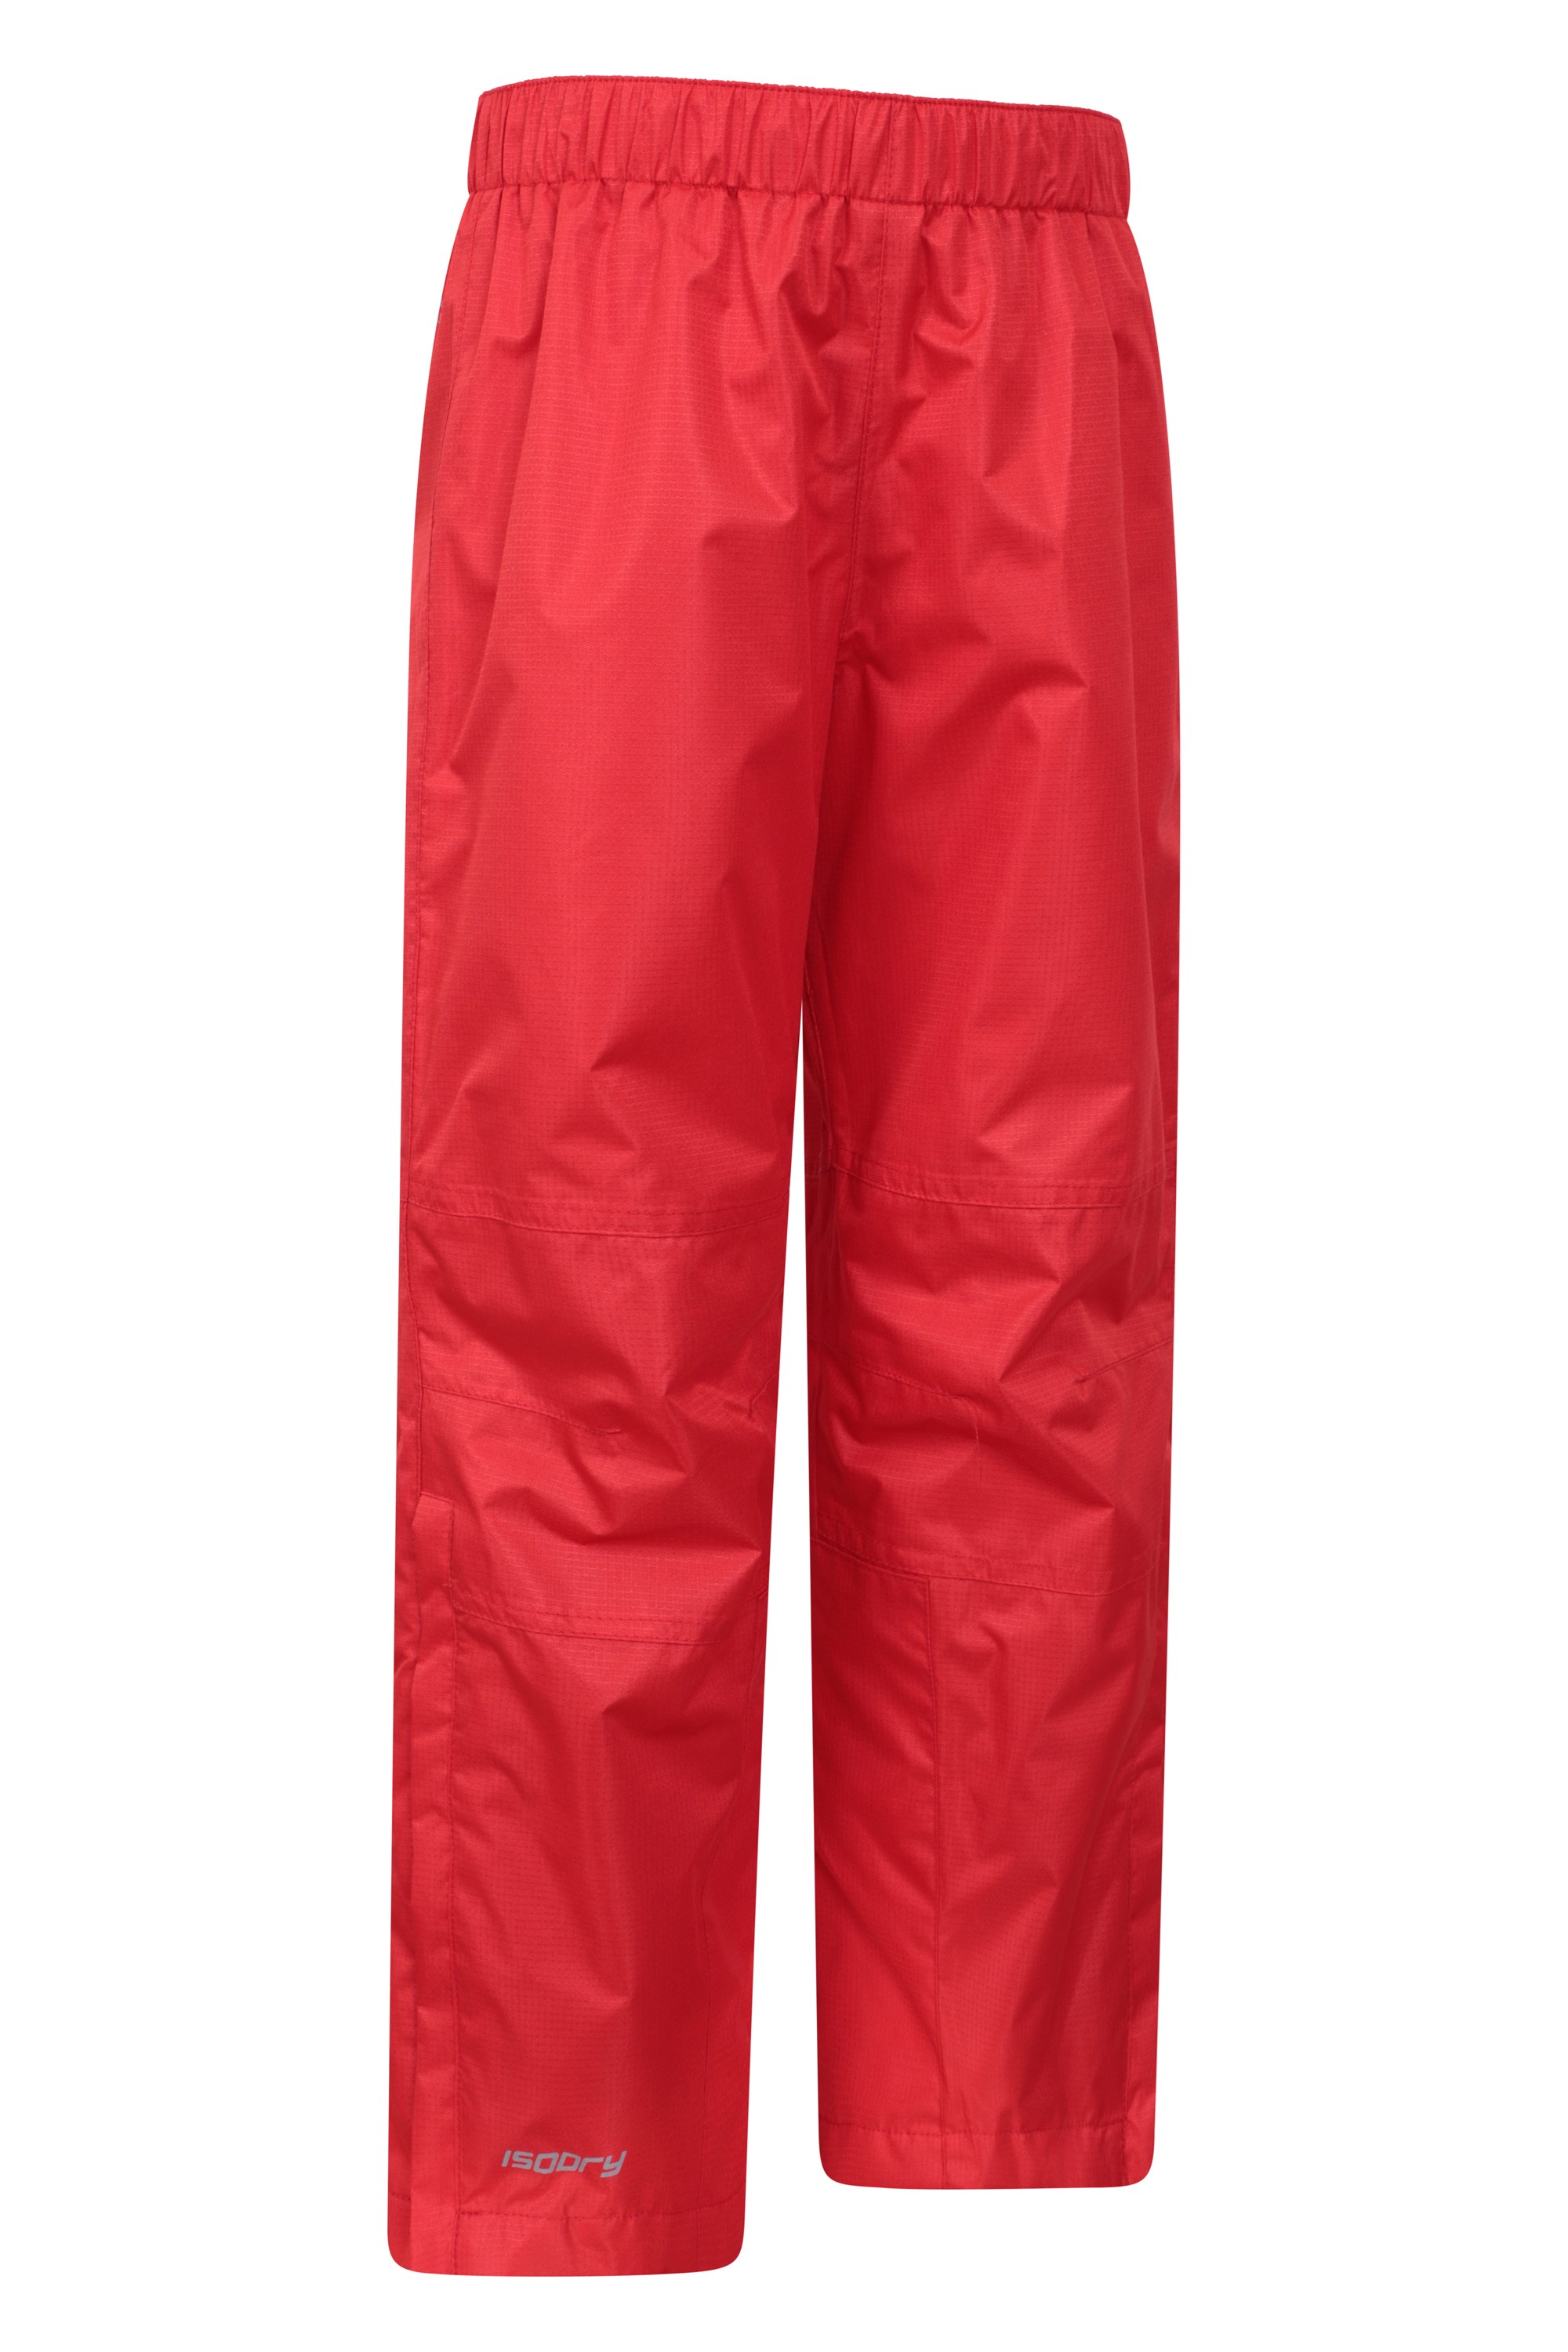 pantalón de Lluvia con Costuras termoselladas Mountain Warehouse Pulverizadores Impermeables para niños Spray Pantalón Transpirable para niños para Cualquier época del año 